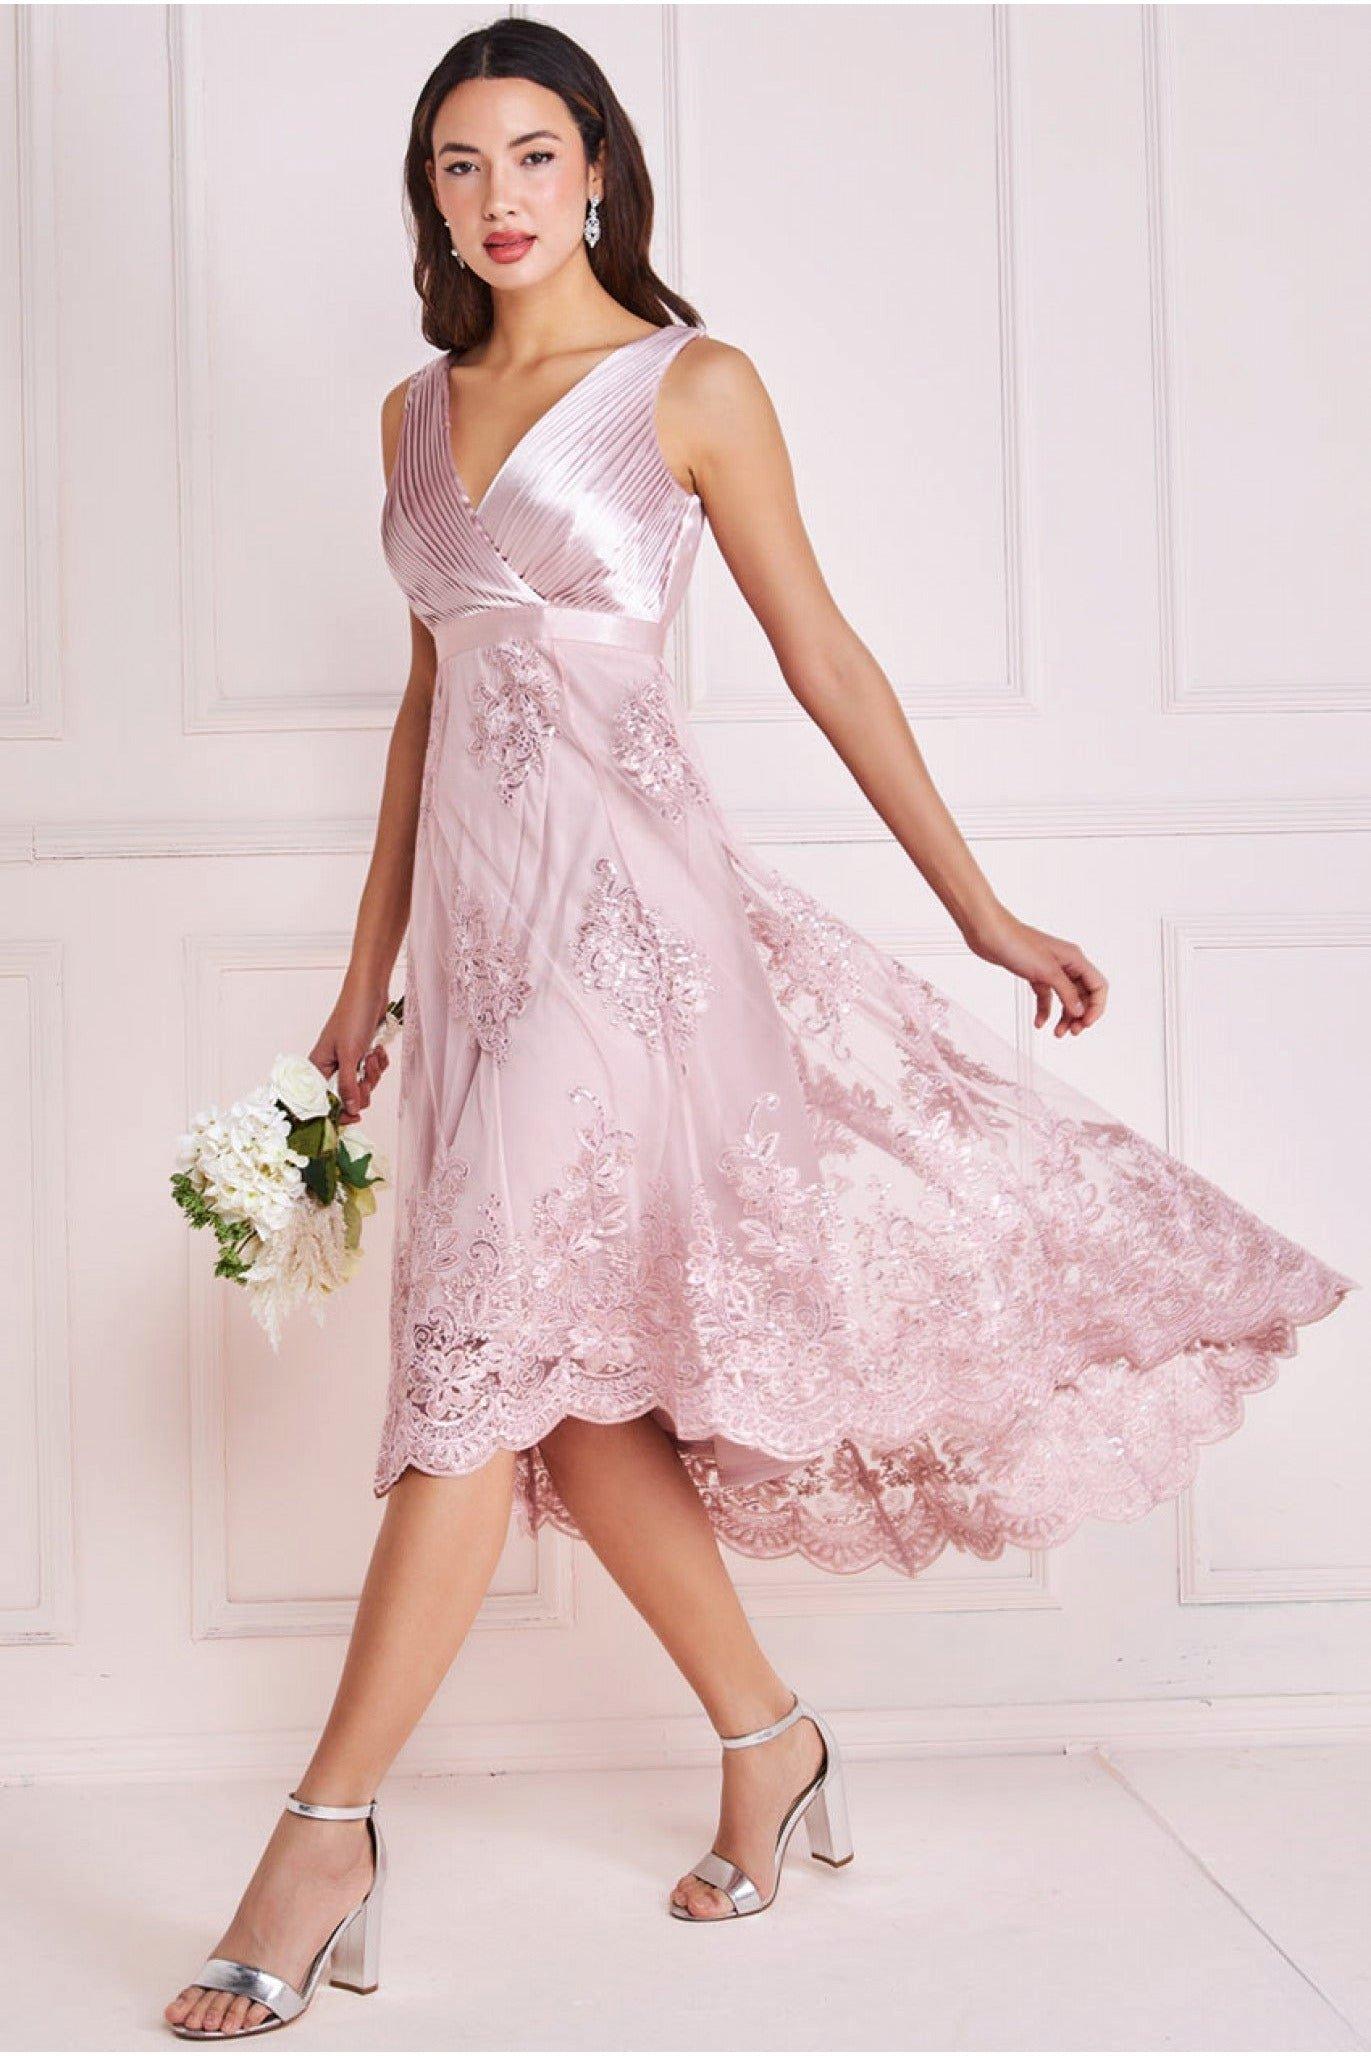 Wedding Reception Dresses Bride | Wedding Reception Dresses Women - Mermaid  Wedding - Aliexpress